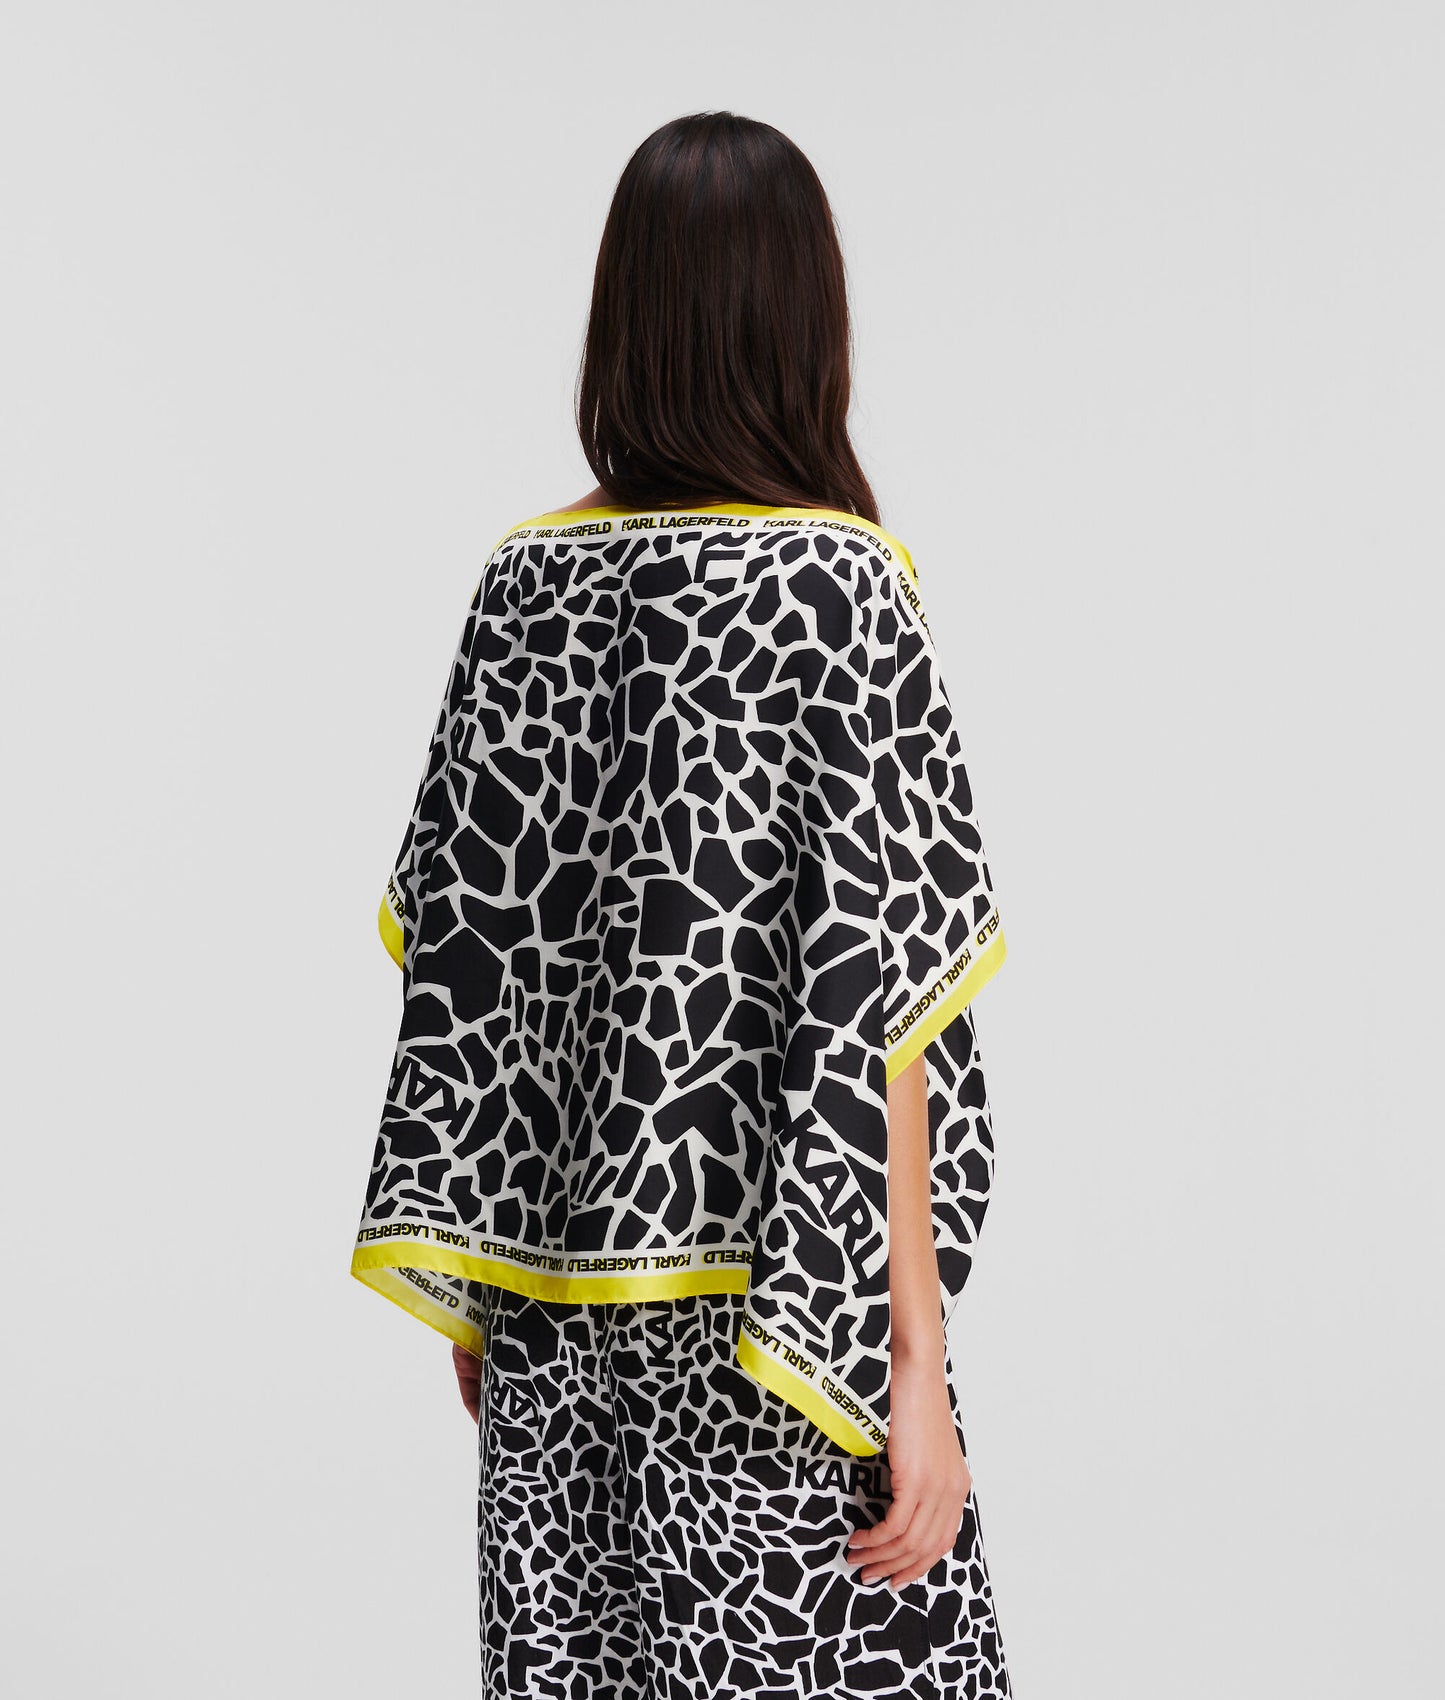 Karl Lagerfeld Giraffe Print Silk Tunic Shirt 241W1607